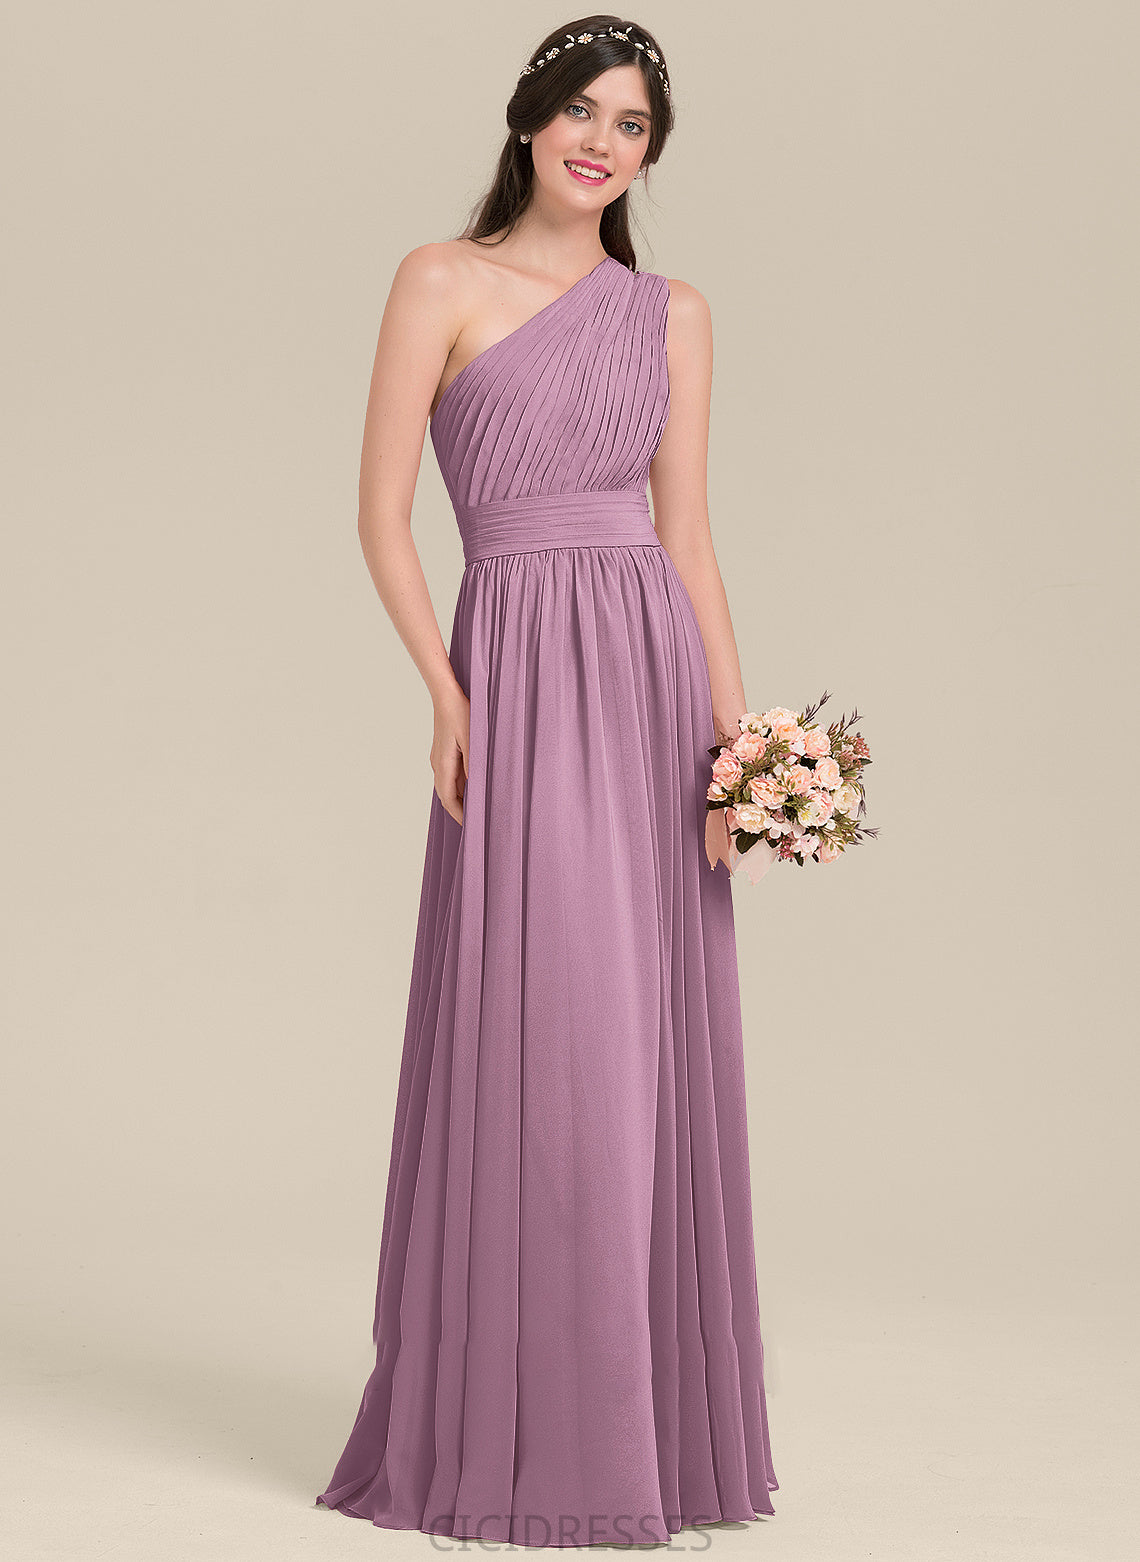 Embellishment One-Shoulder Neckline Length Silhouette Fabric Ruffle Floor-Length A-Line Pat Natural Waist Scoop Bridesmaid Dresses